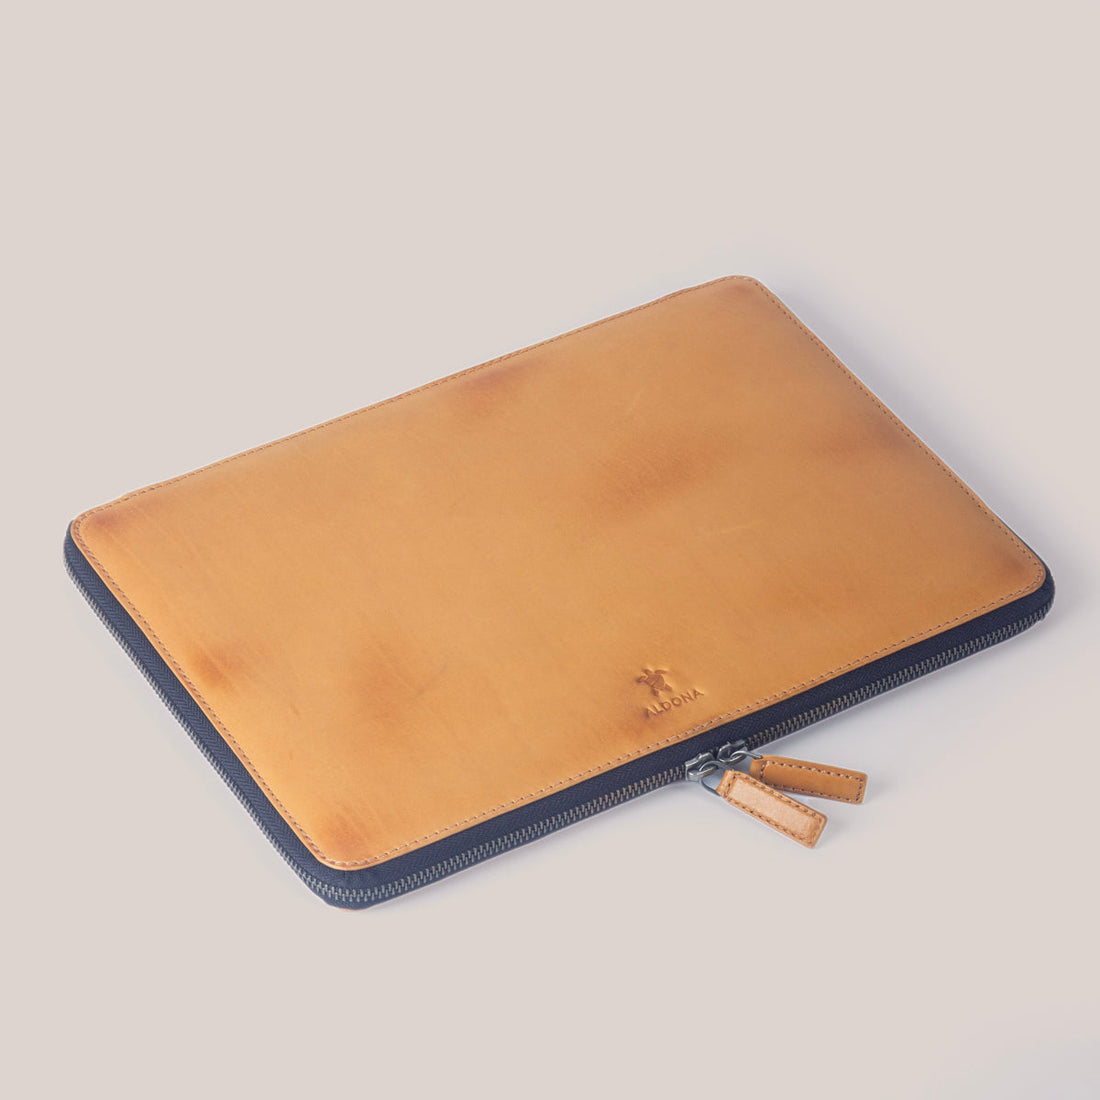 Microsoft Surface Book 13.5 Zippered Laptop Case - Cognac